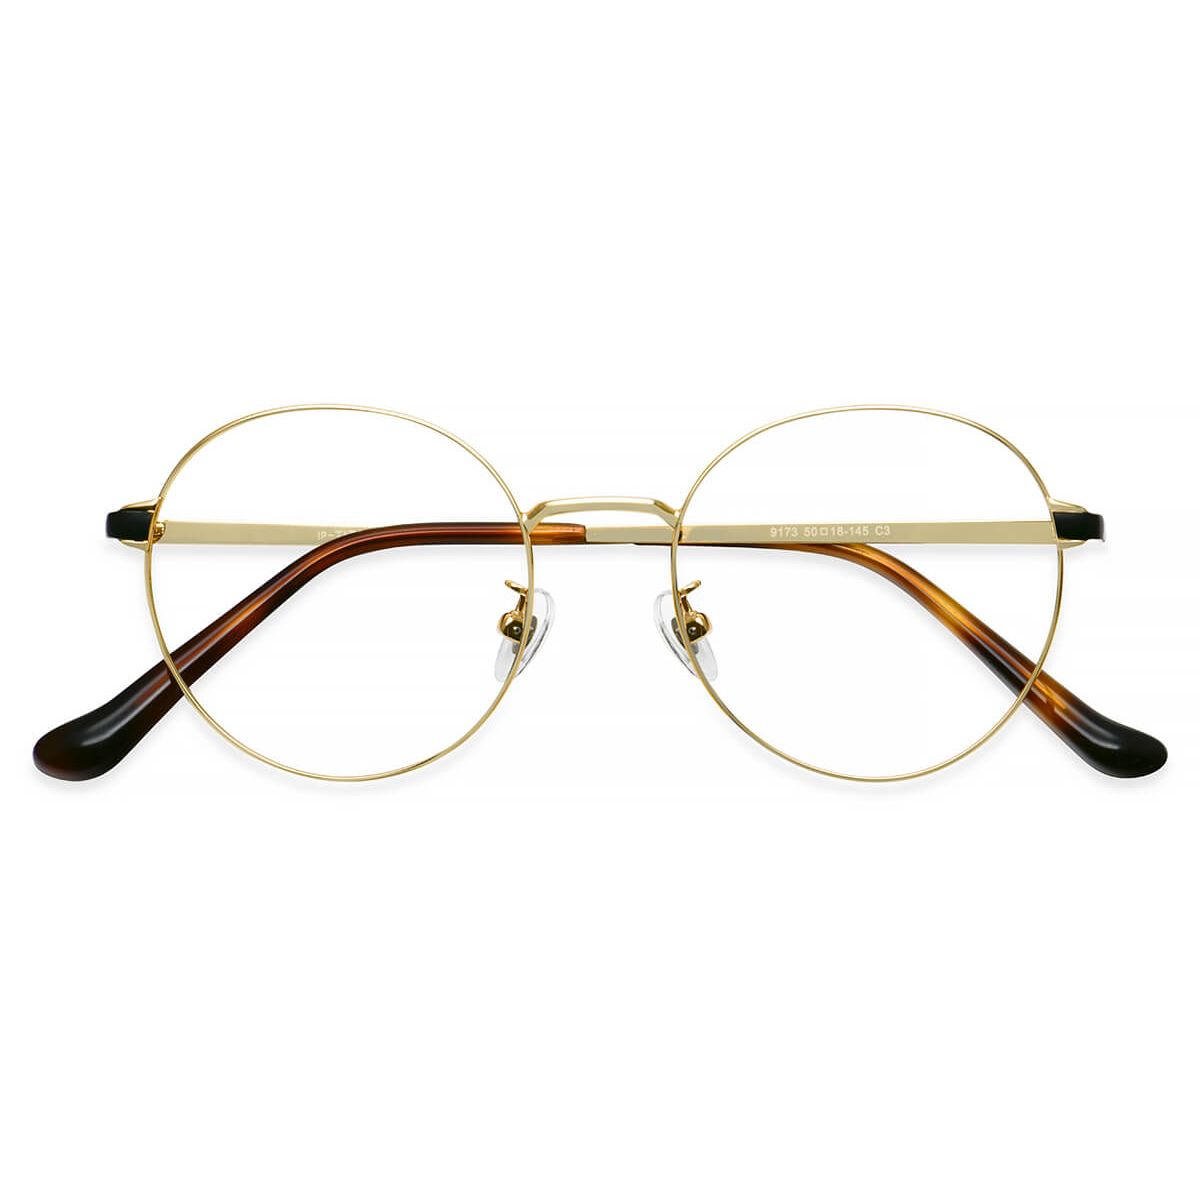 9173 Round Yellow Eyeglasses Frames | Leoptique